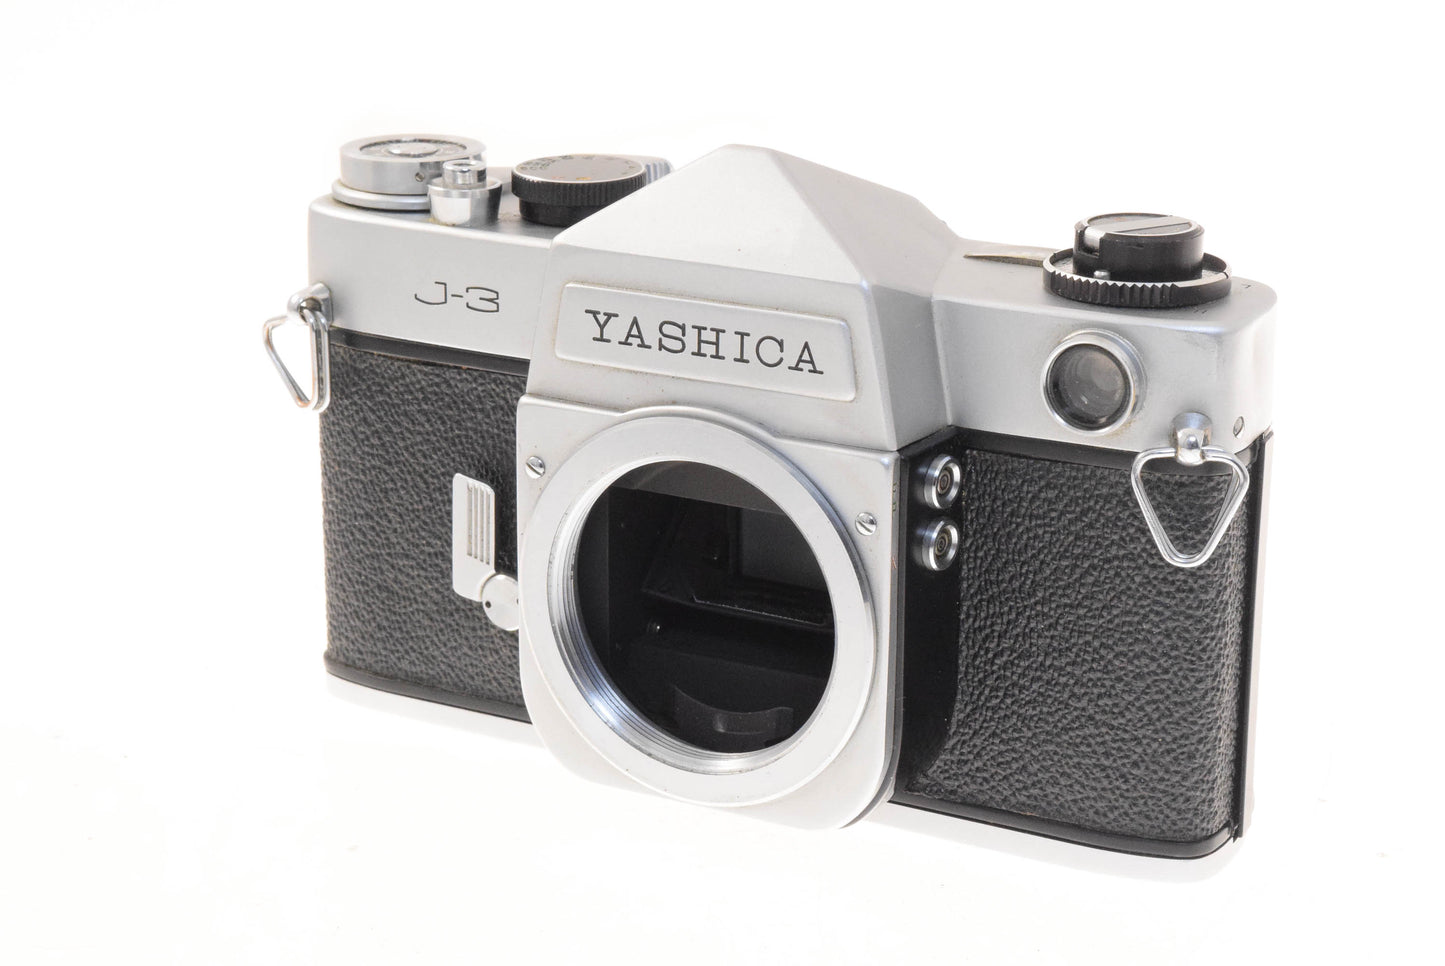 Yashica J-3 - Camera